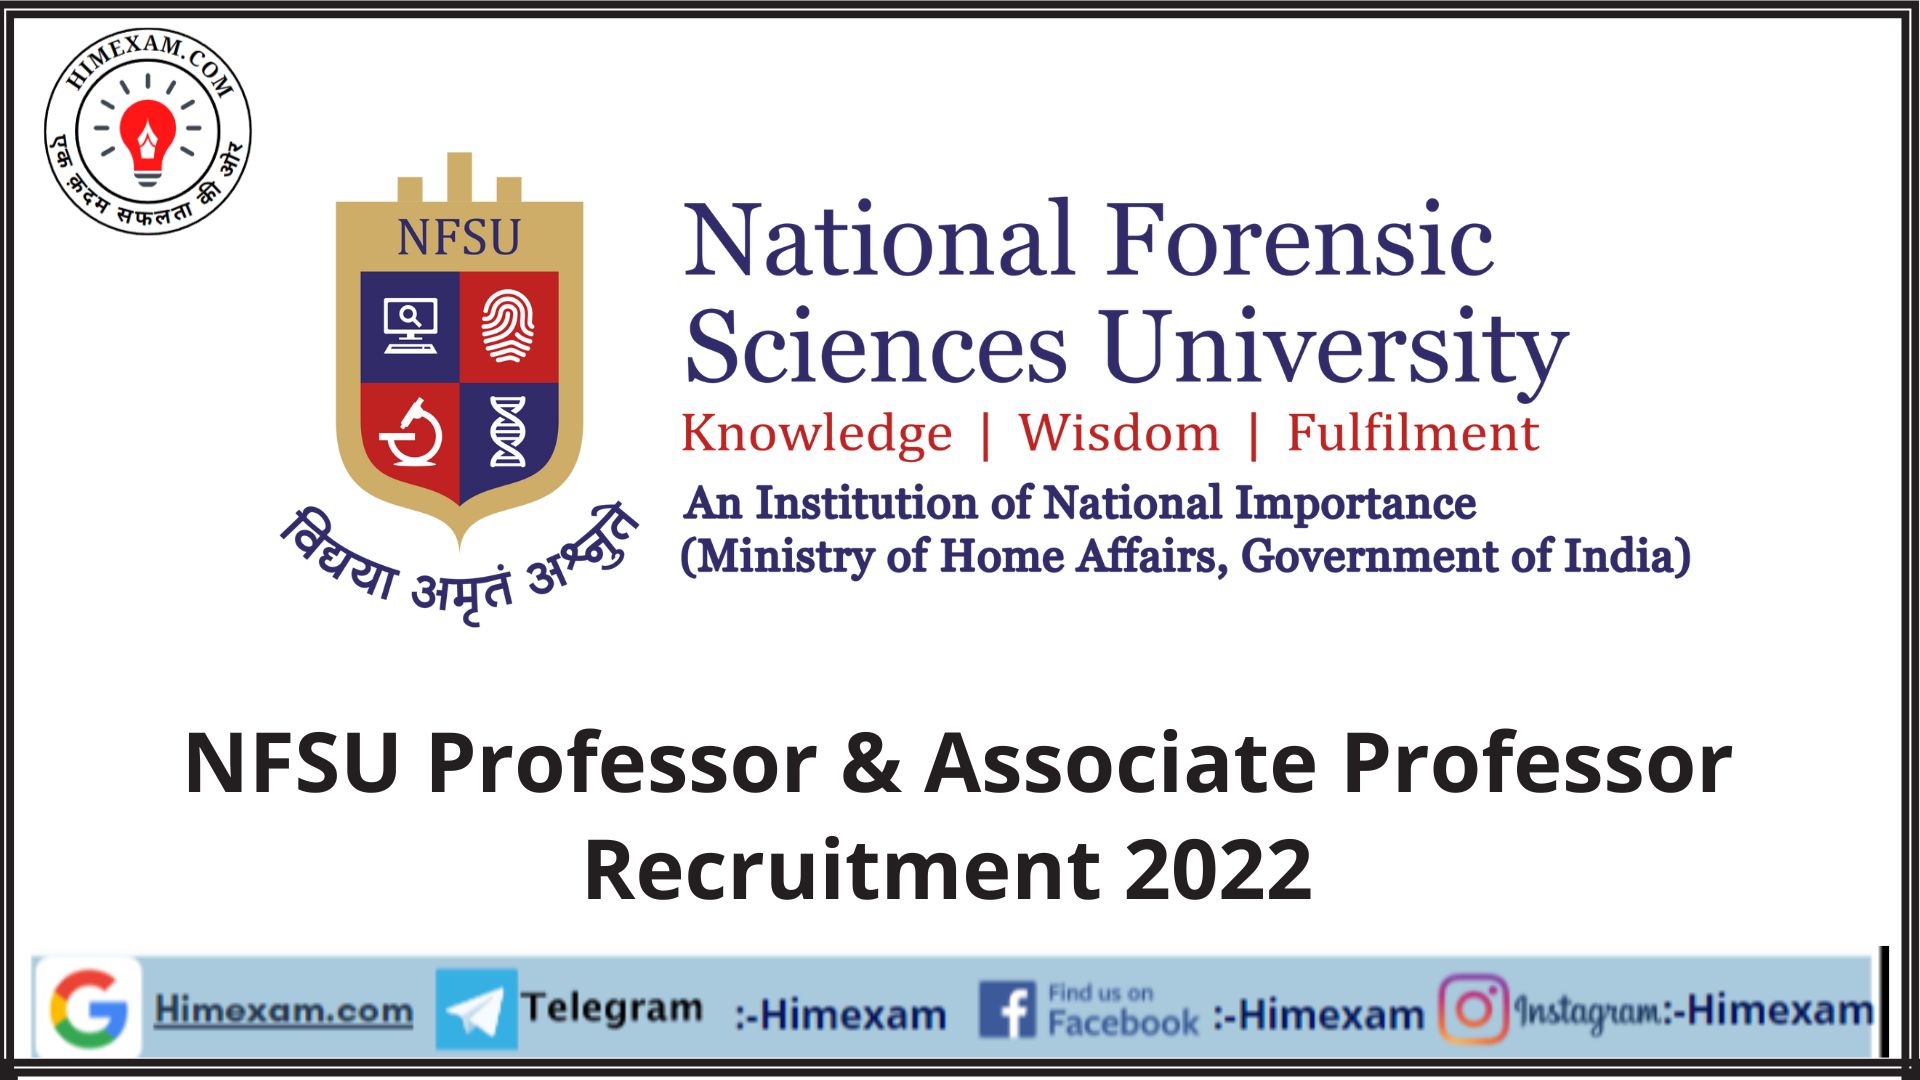 NFSU Professor & Associate Professor Recruitment 2022